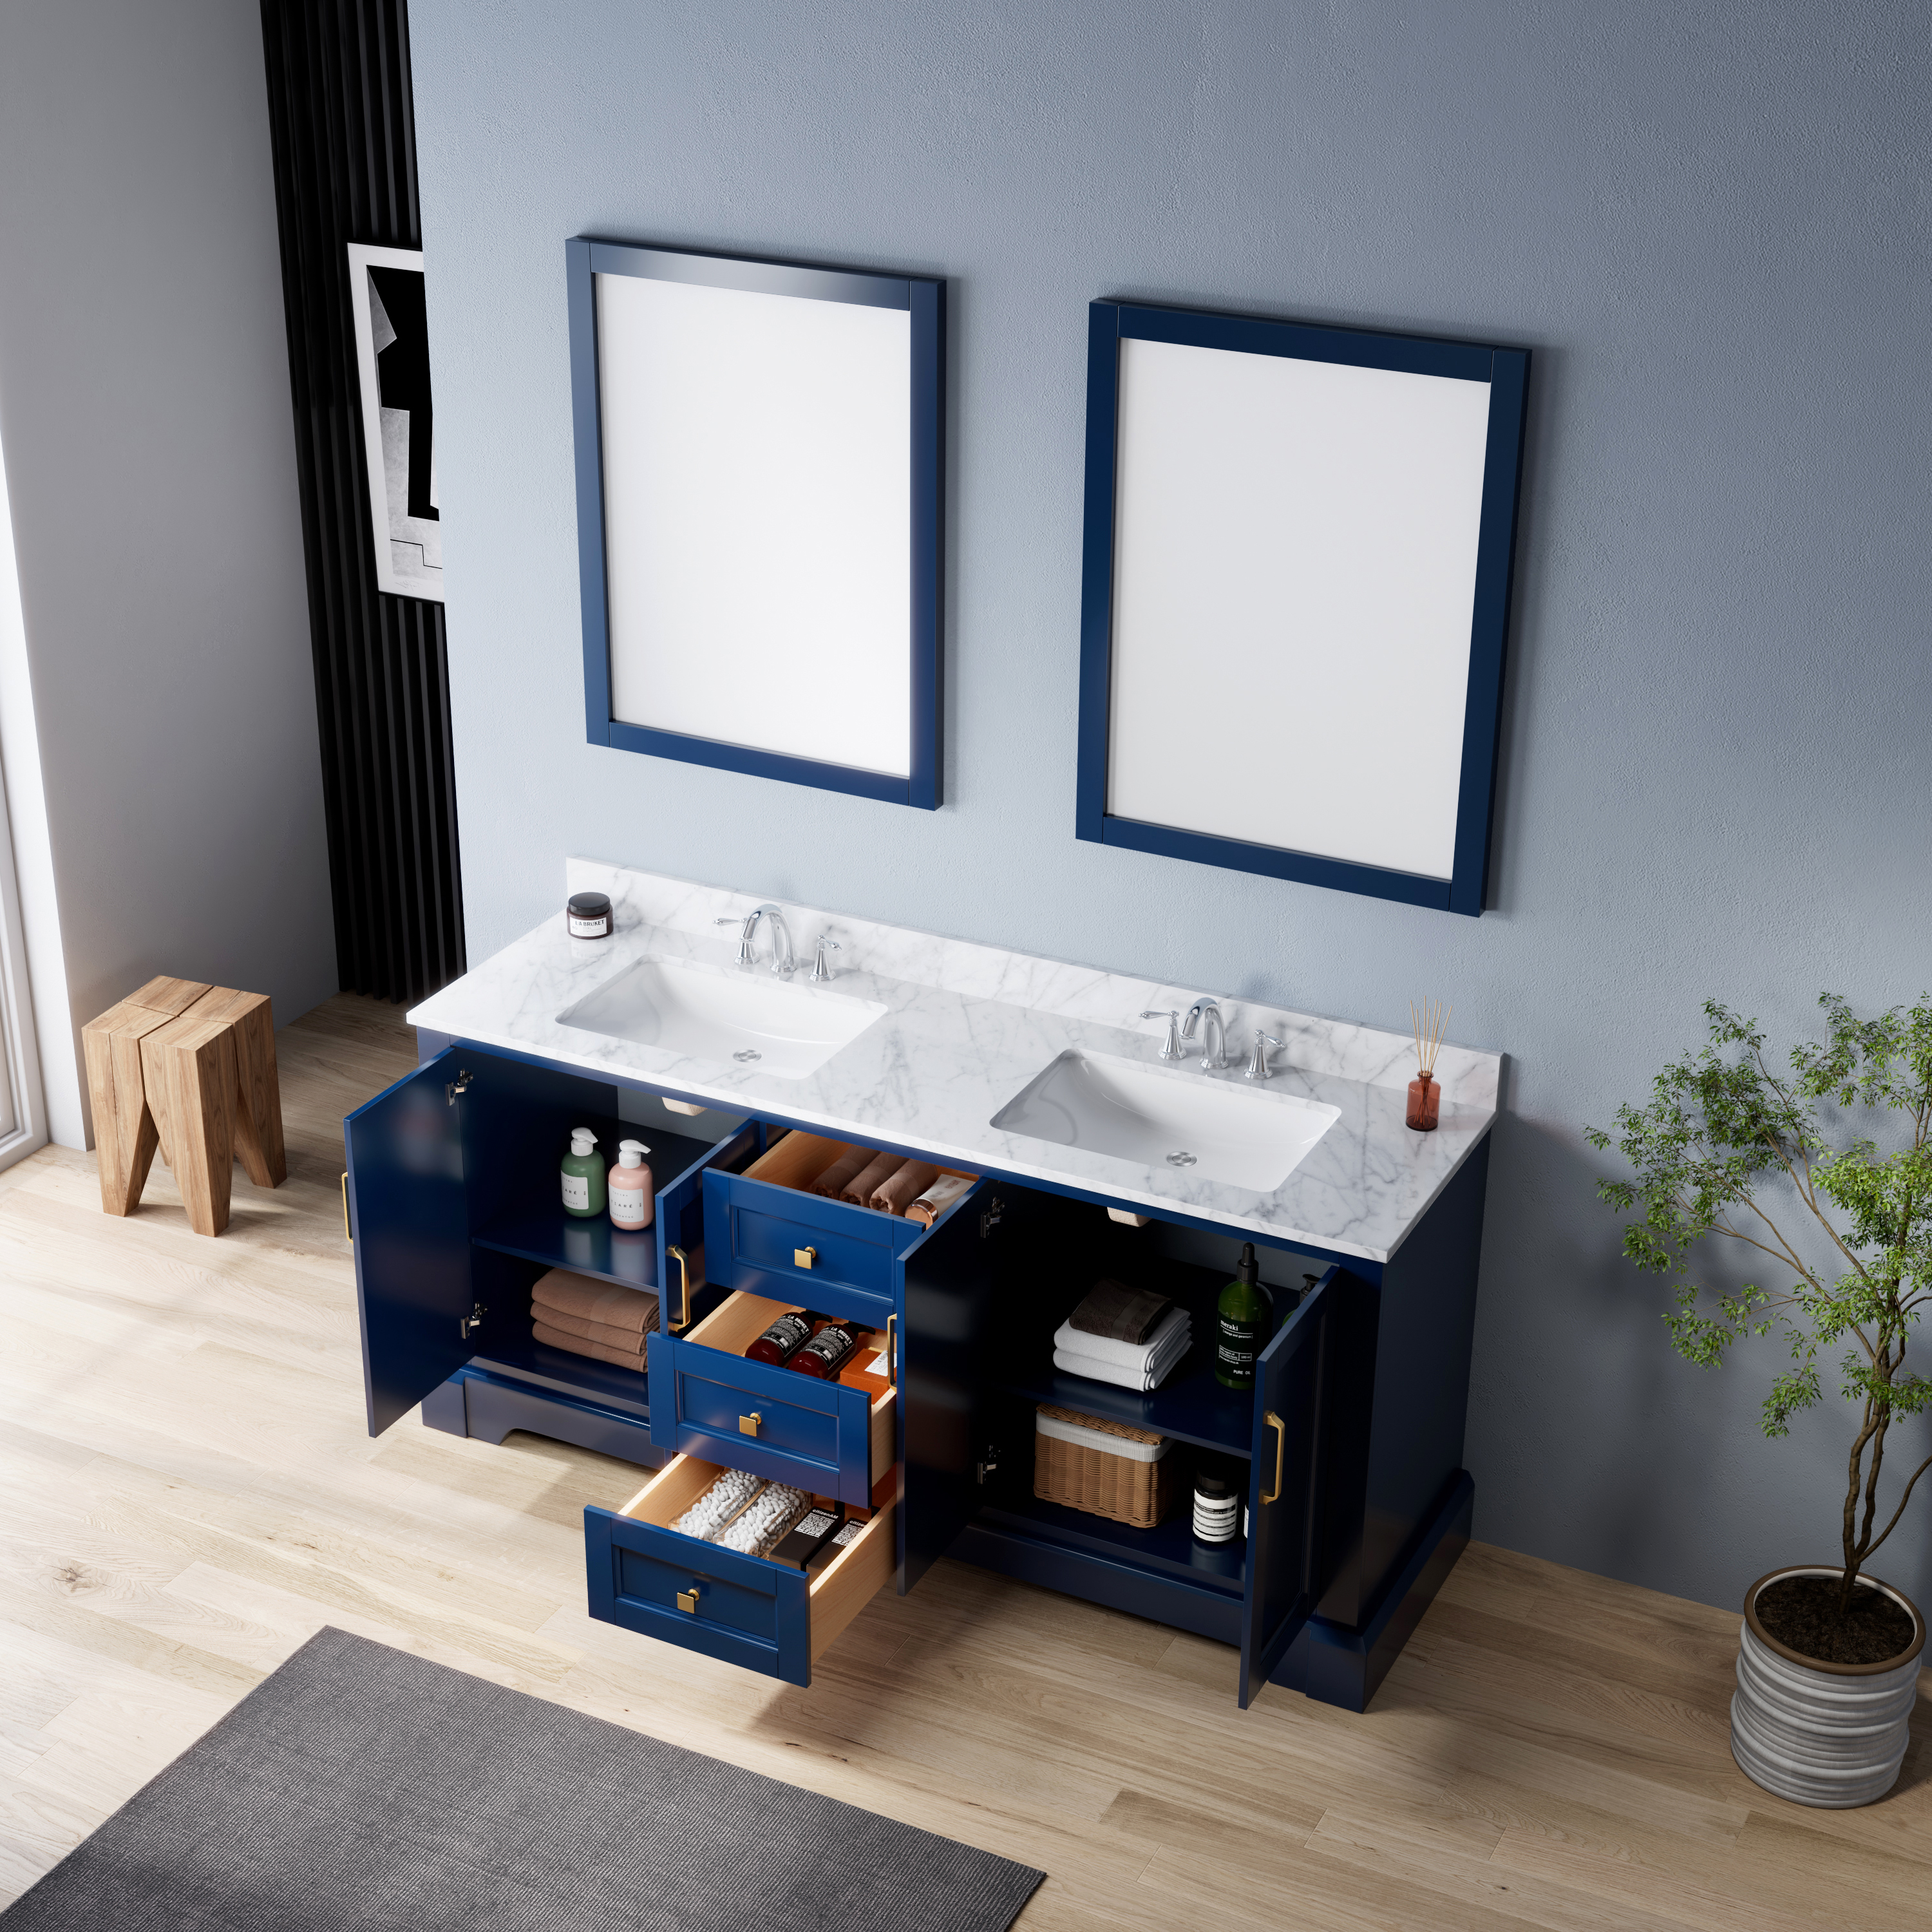 72 inch traditional navy blue Bathroom Vanity